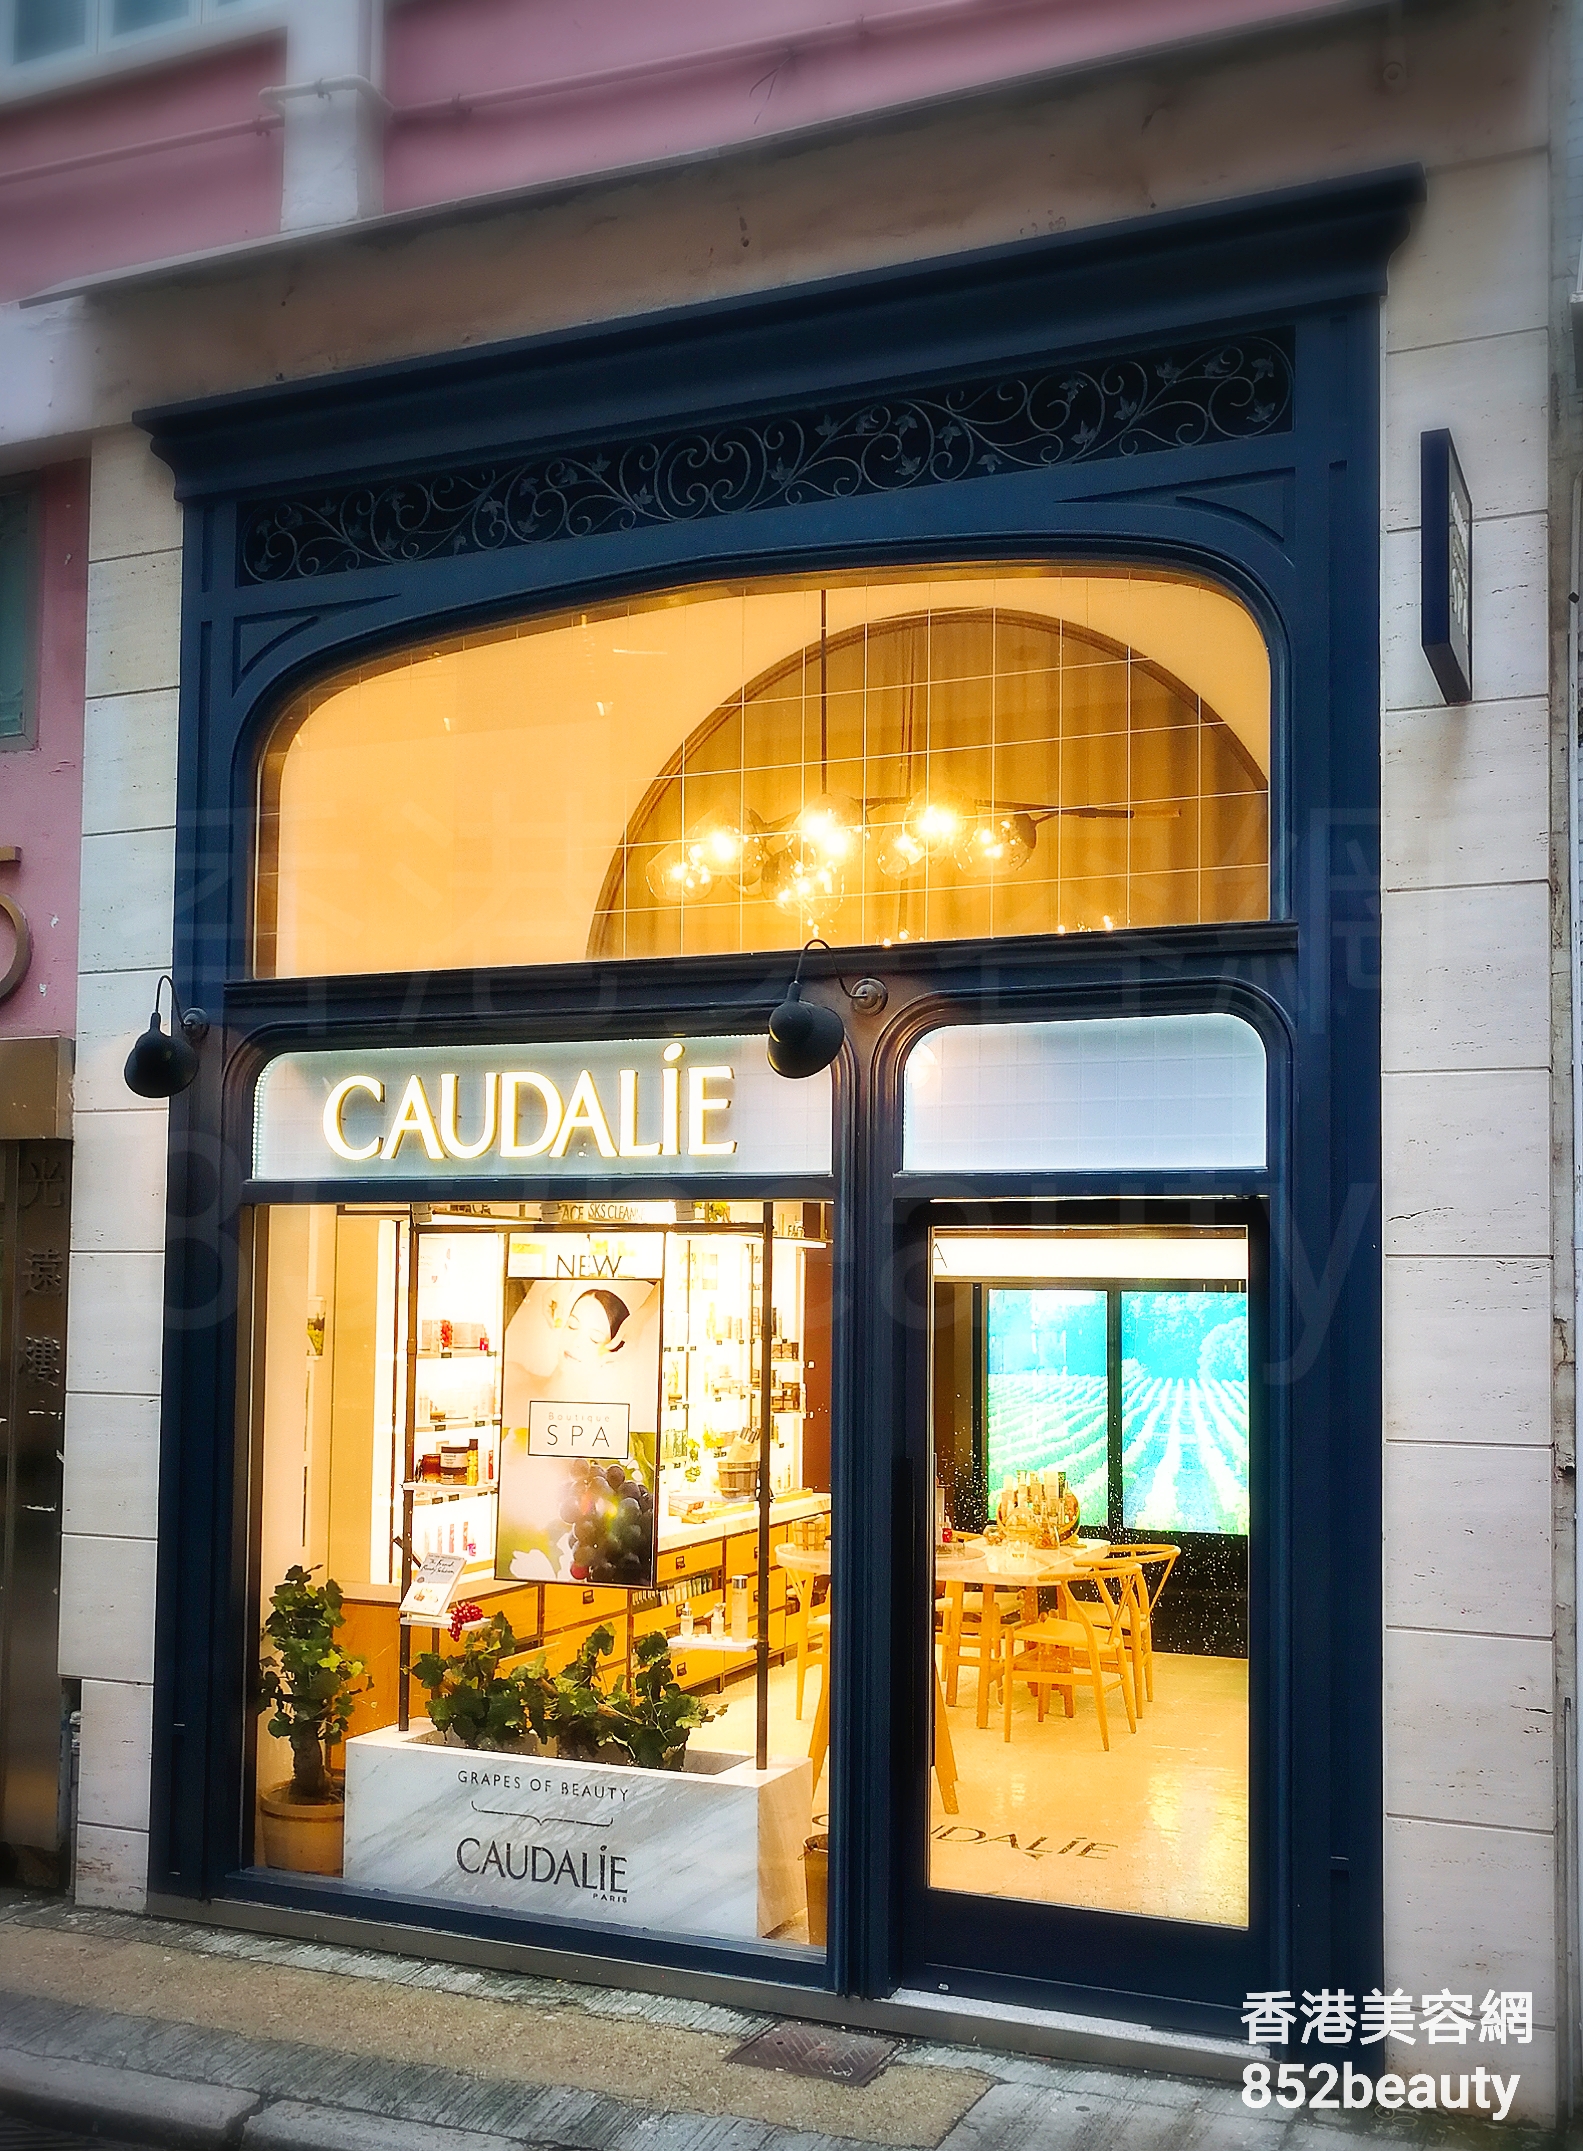 美容院 Beauty Salon: Le Spa Caudalie